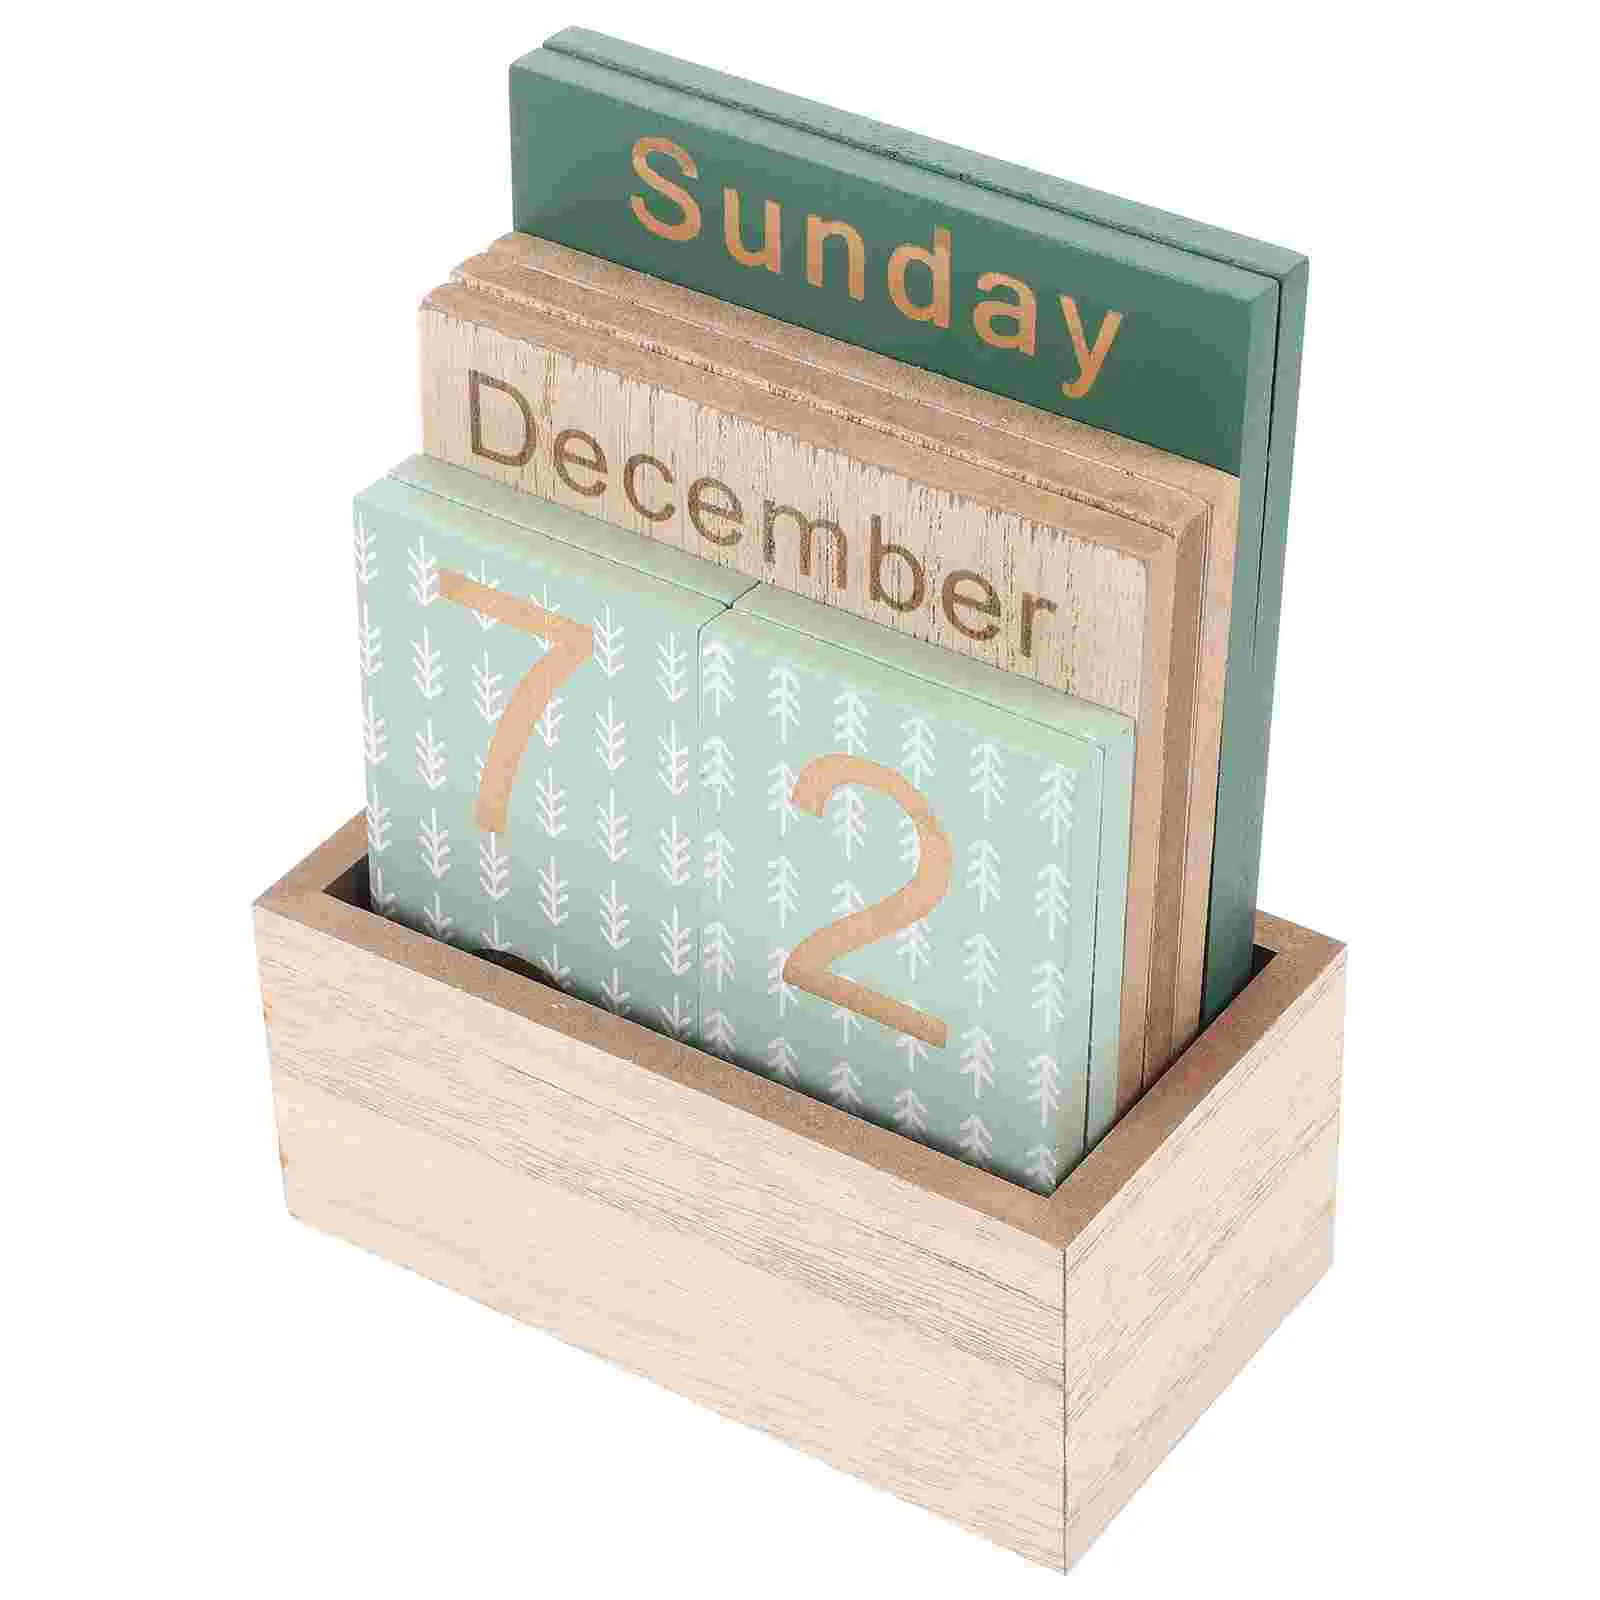 Desk Calendar Wooden Display Month Date Mini Time Planning Accessories Block Office wooden calendar display household desk calendars perpetual mini block accessories month date